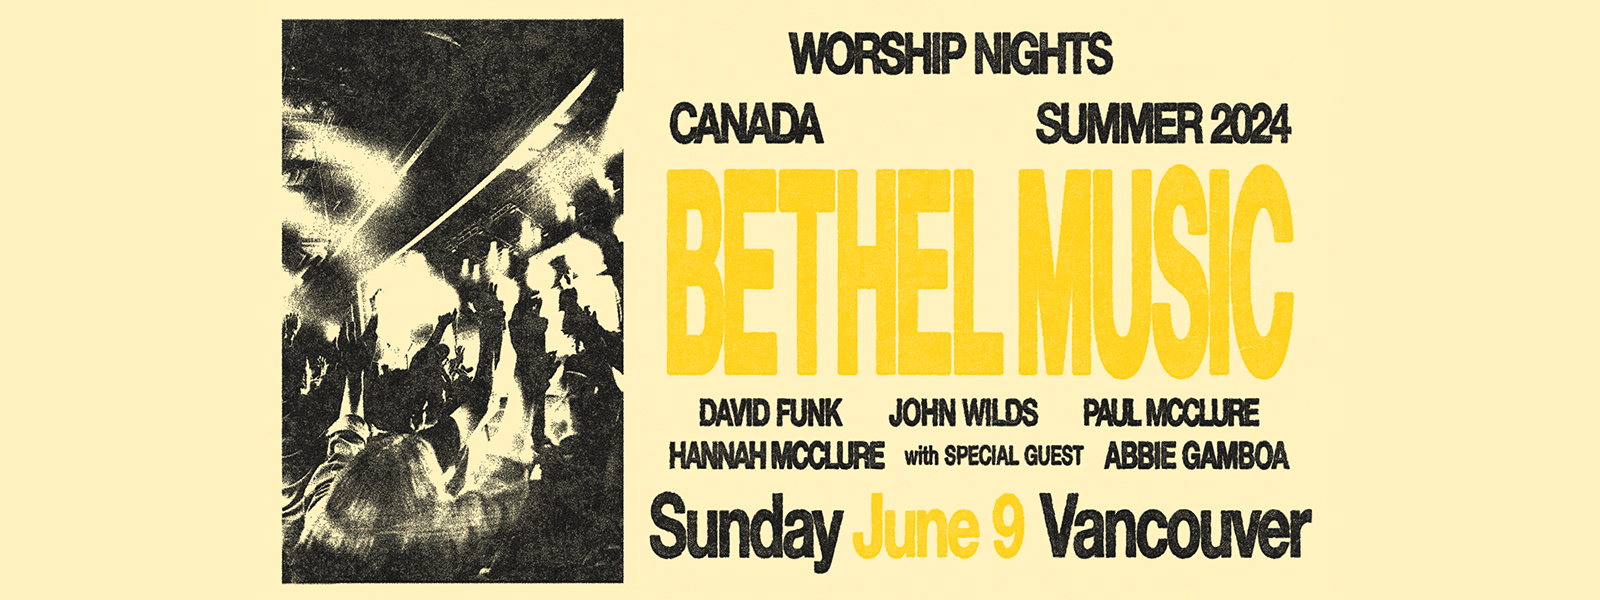 Bethel Music Worship Nights Canada 2024